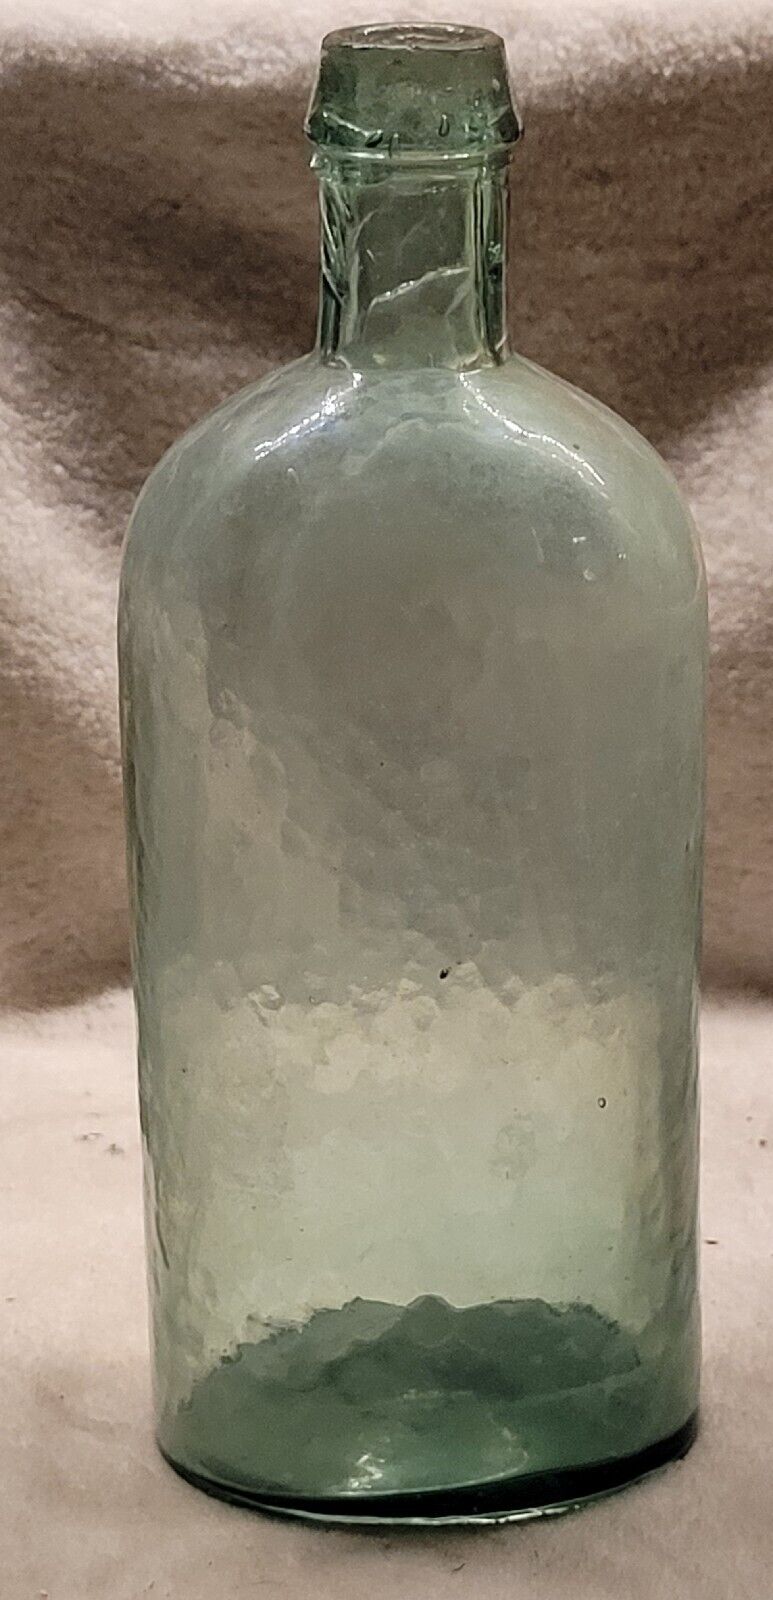 Extremely Hammered Whittled Pontiled Olive Tint Large Utility Or Medicine Bottle